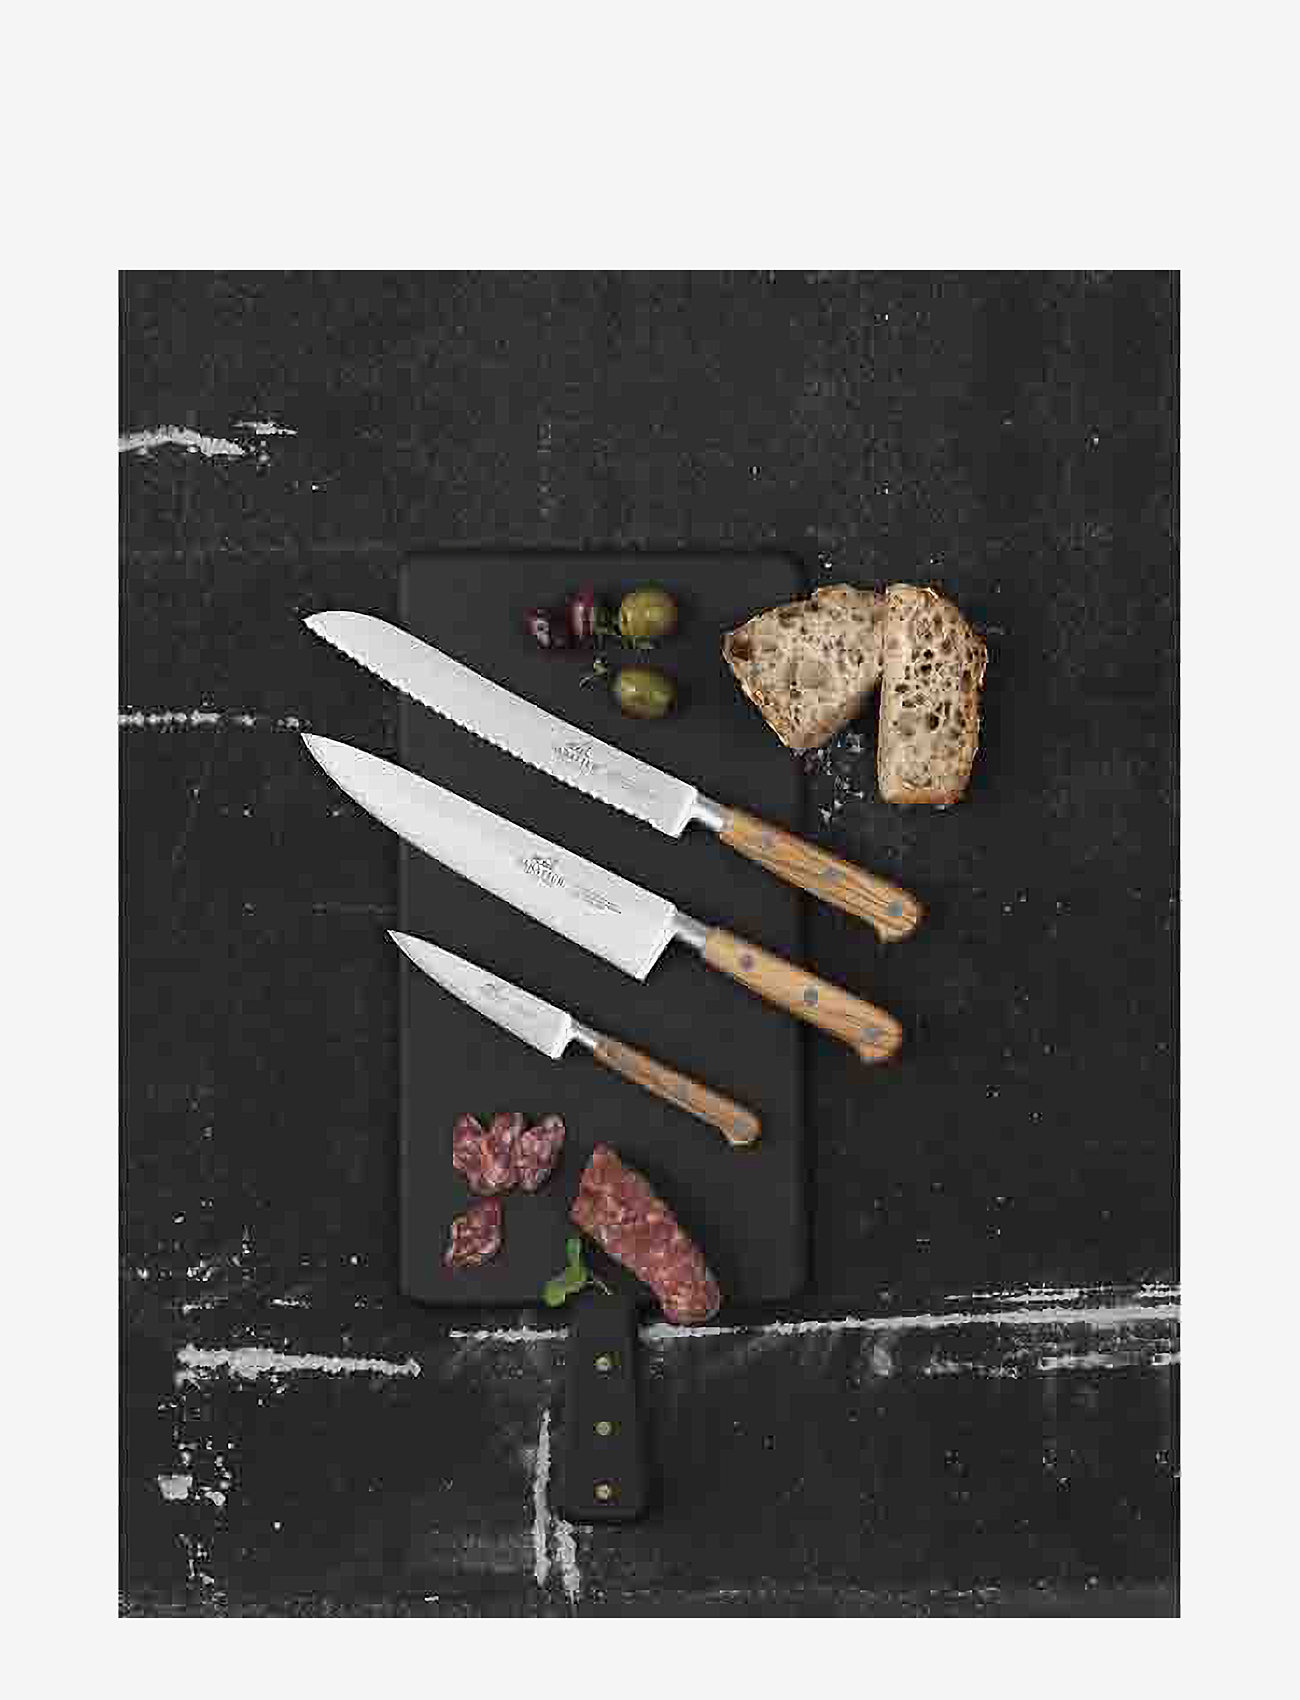 Lion Sabatier - Herb knife Ideal Provence 10cm - groentenmessen - steel/wood - 1